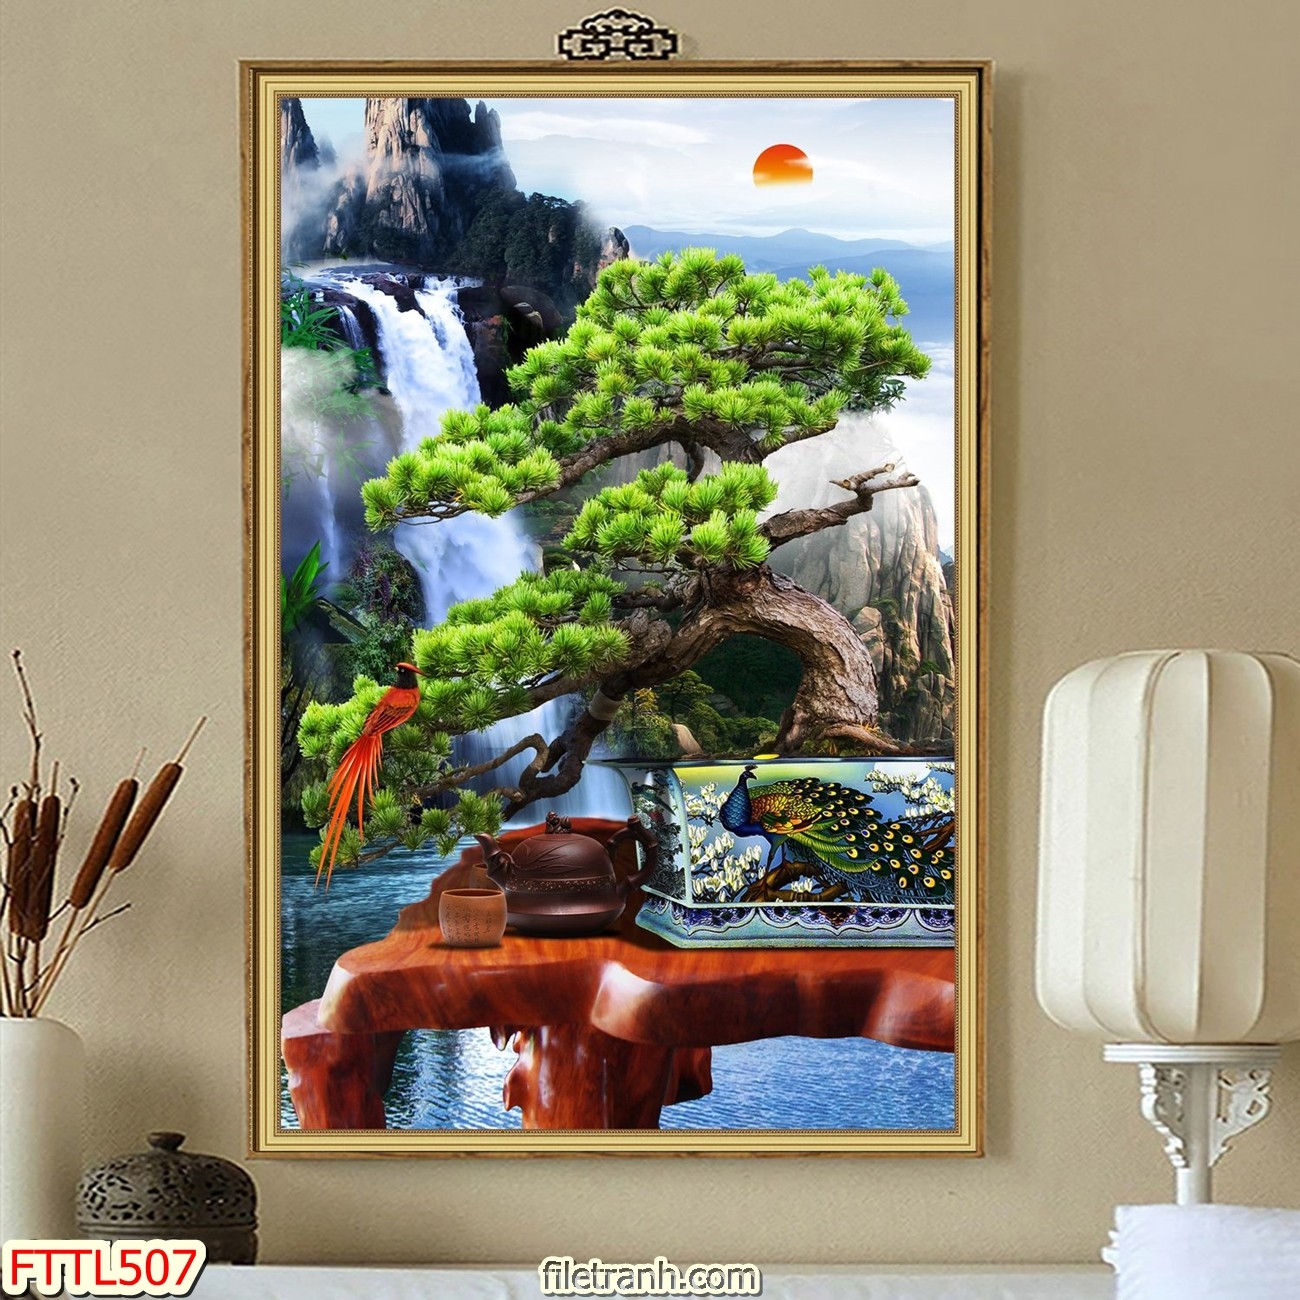 https://filetranh.com/file-tranh-chau-mai-bonsai/file-tranh-chau-mai-bonsai-fttl507.html